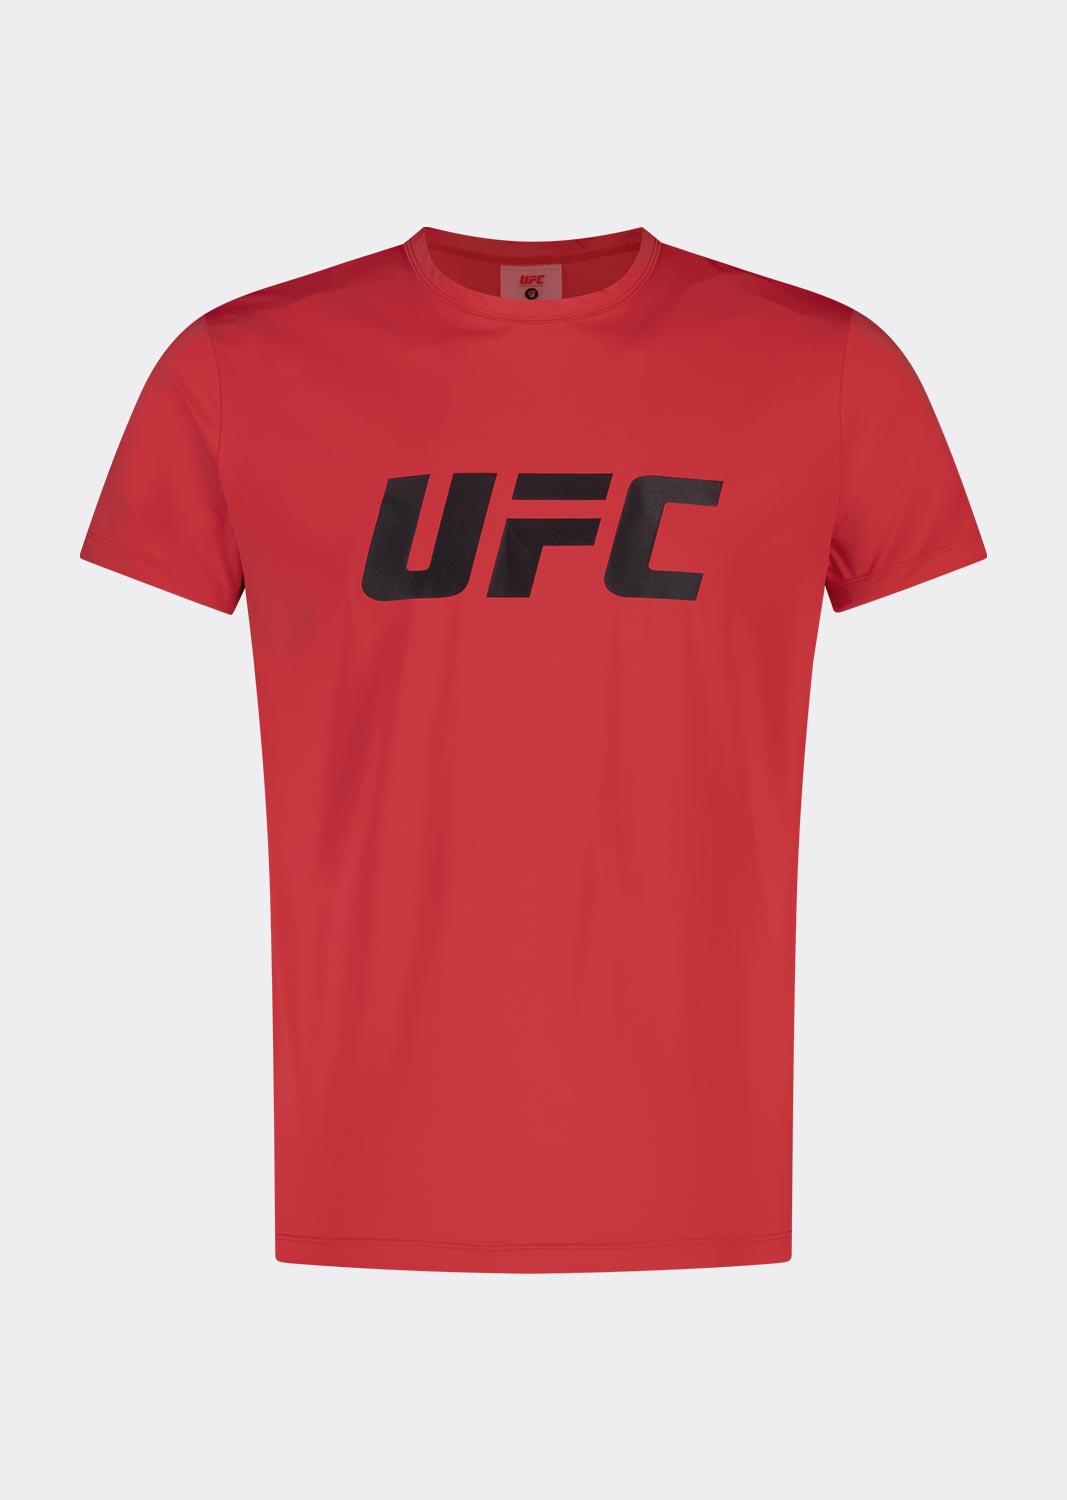 UFC 텐션 빅로고 머슬핏 반팔 티셔츠 레드 U4SSV2106RE